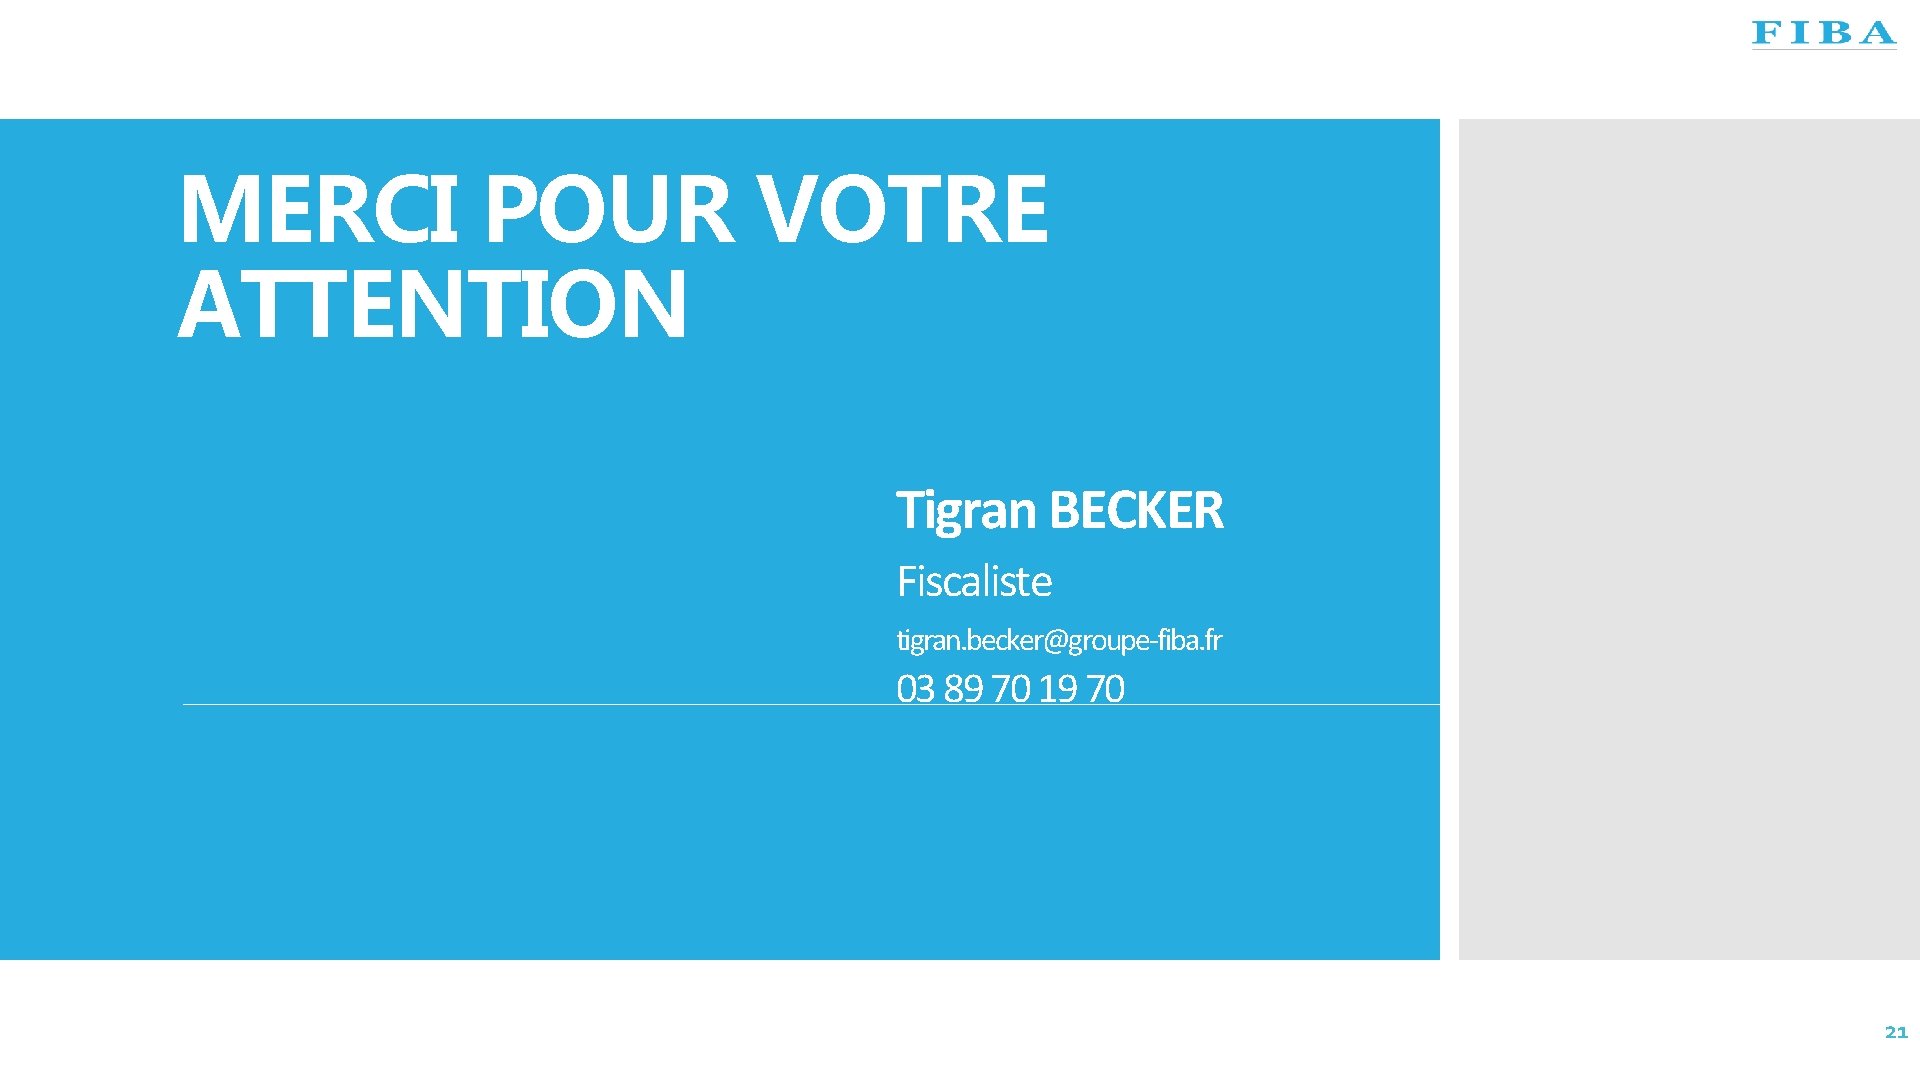 MERCI POUR VOTRE ATTENTION Tigran BECKER Fiscaliste tigran. becker@groupe-fiba. fr 03 89 70 19